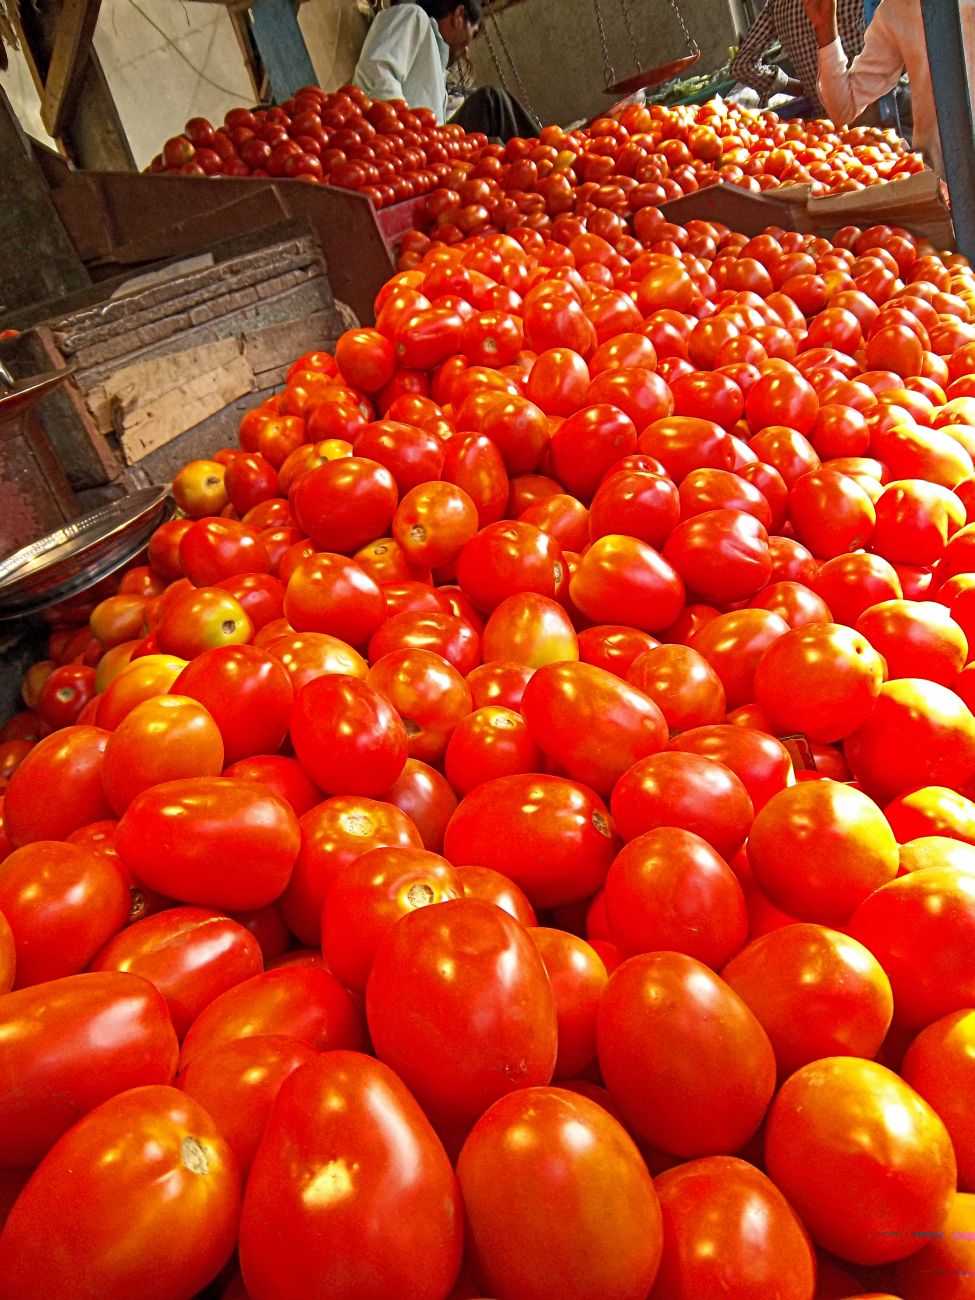 tomatoesinmkt.jpg